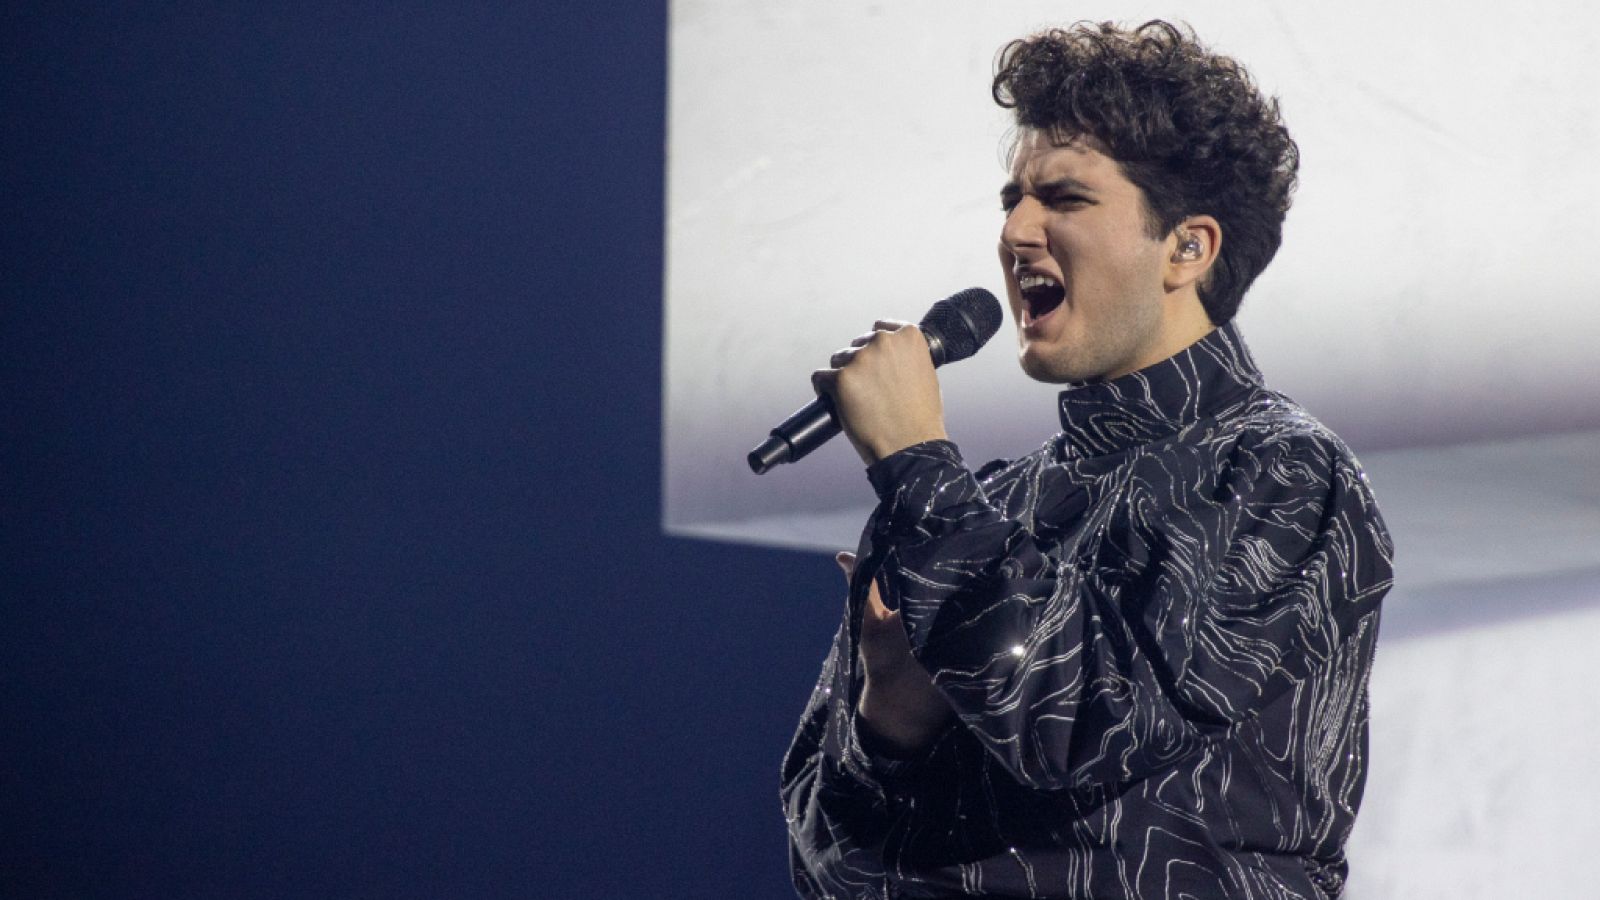 Eurovisión 2021: Suiza canta "Tout l'Univers" en la final